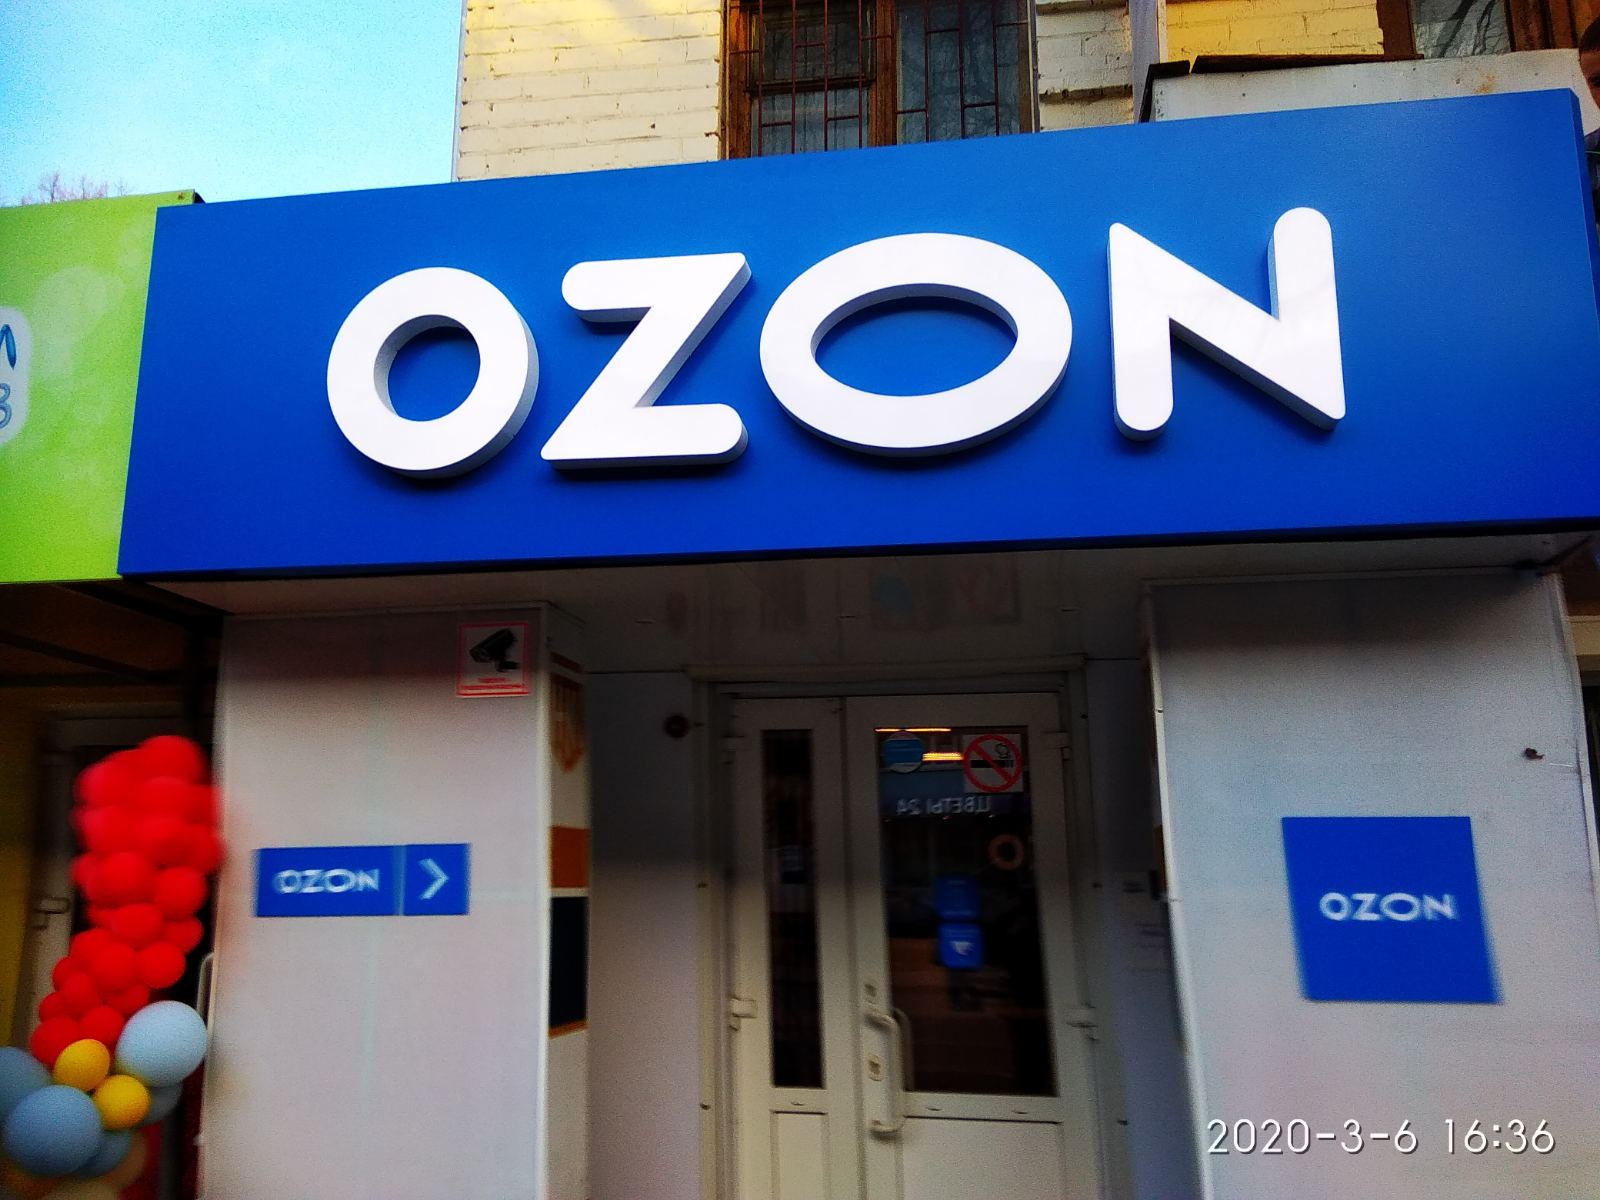 Озон новомосковск интернет. Озон магазин. Вывеска Озон. Вывеска Озон на подложке. Фото магазина Озон.